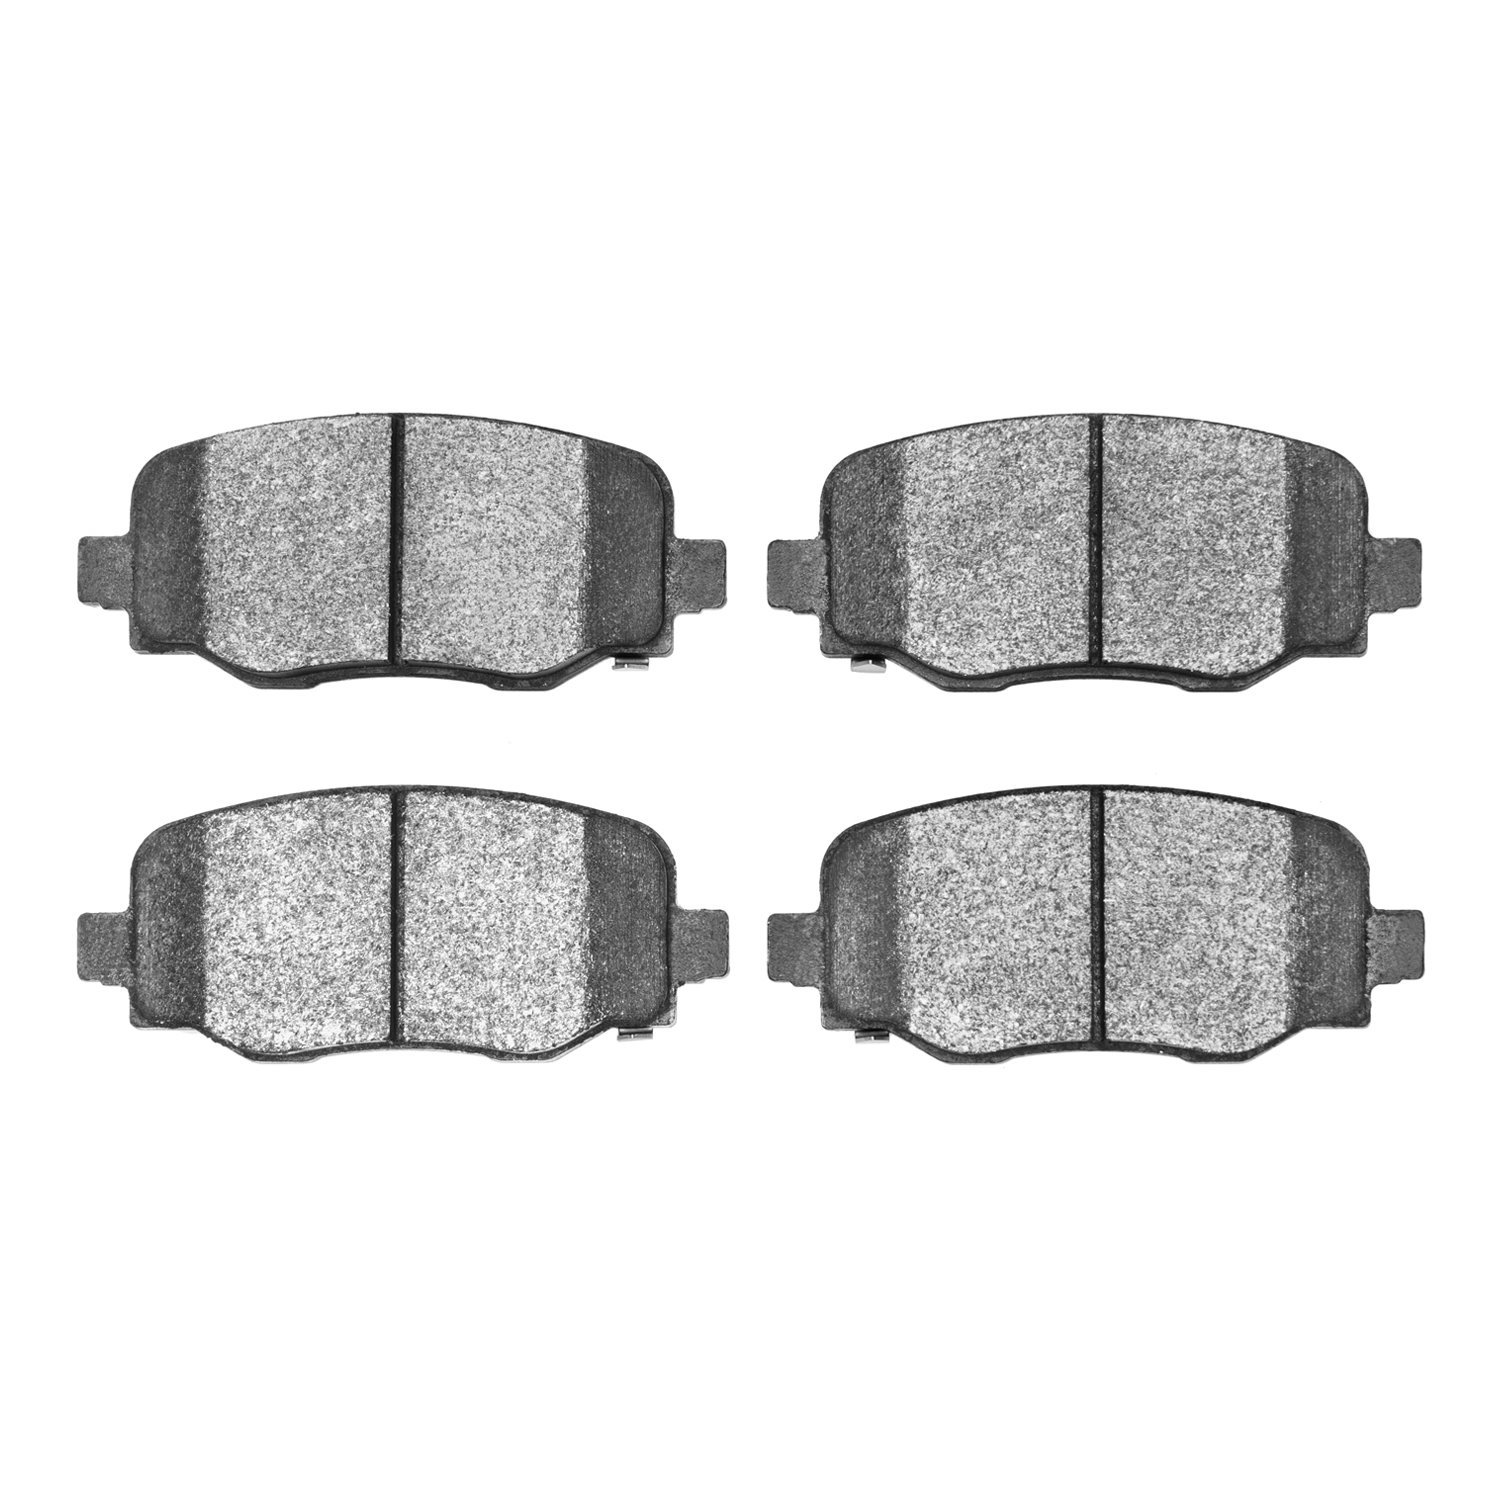 1310-1734-00 3000-Series Ceramic Brake Pads, Fits Select Mopar, Position: Rear